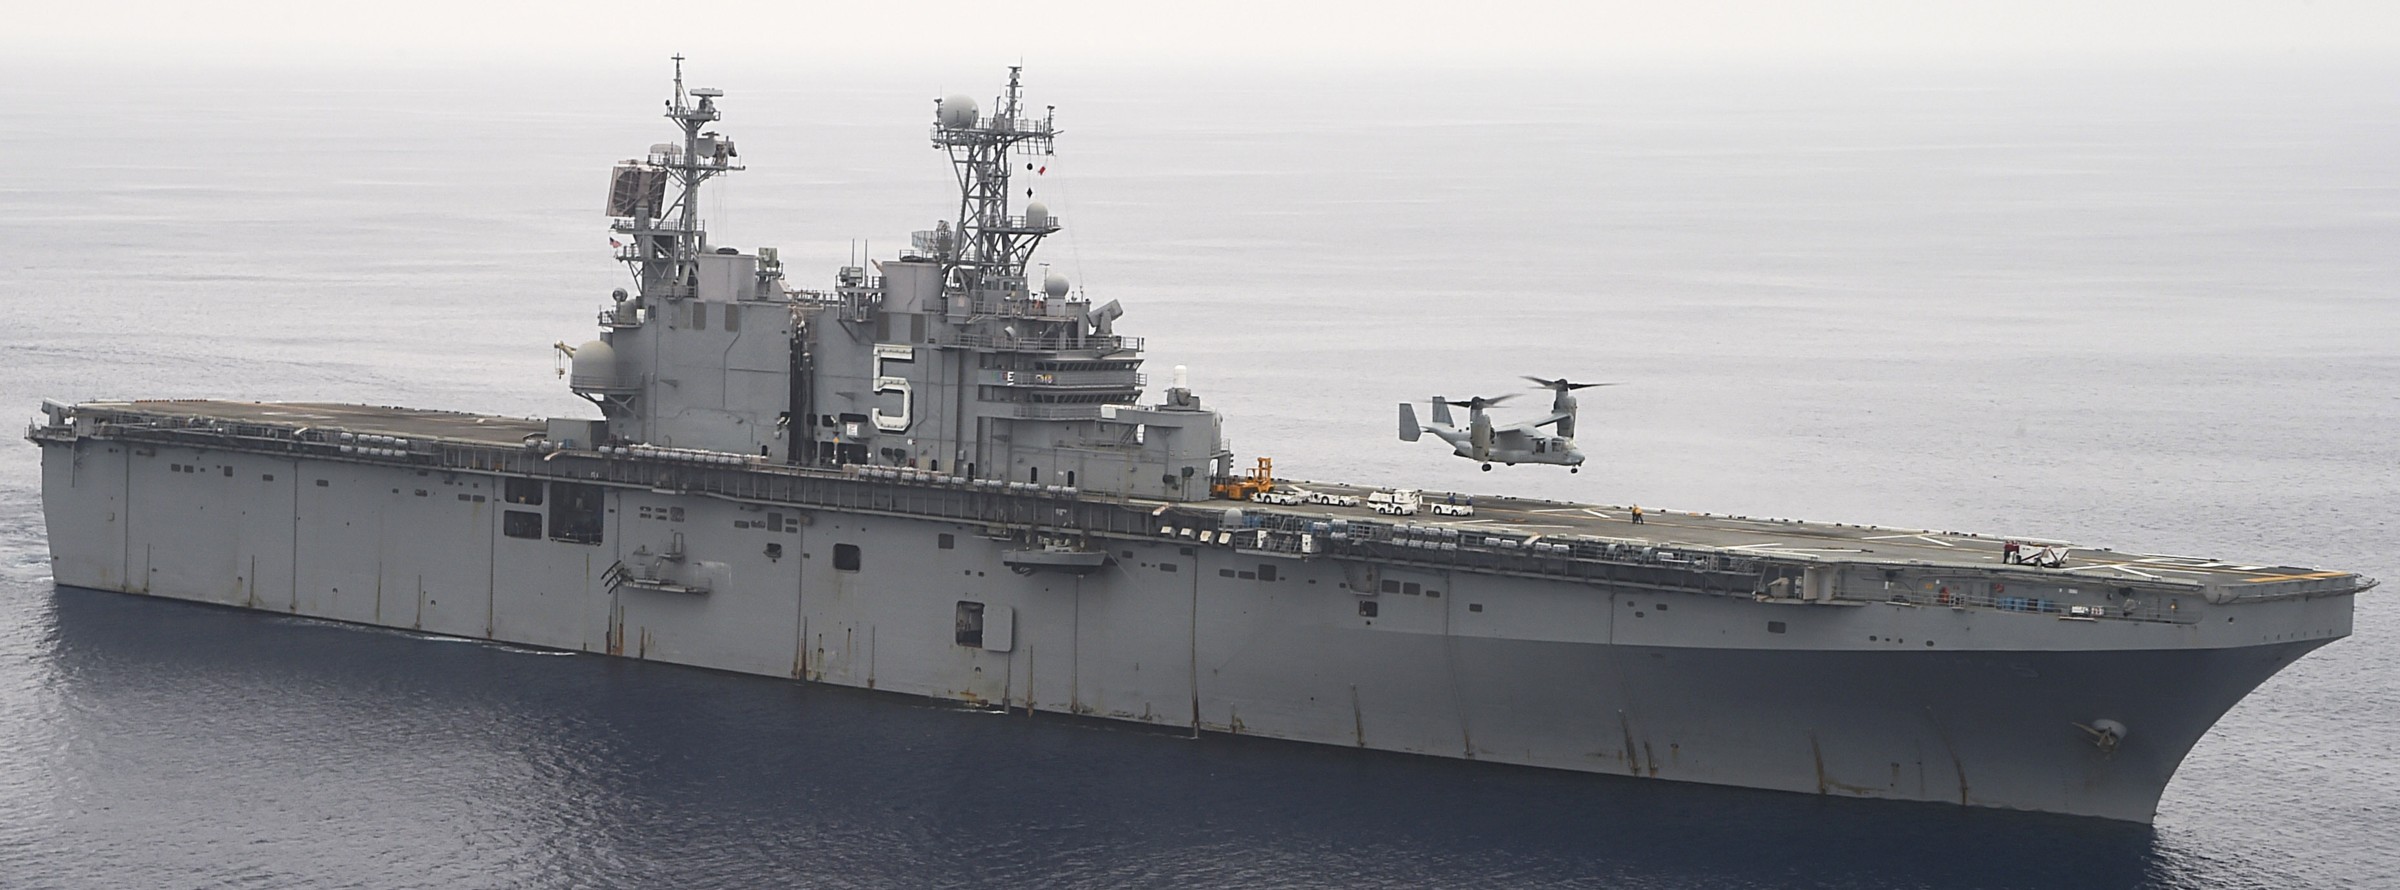 lha-5 uss peleliu tarawa class amphibious assault ship landing helicopter us navy 121